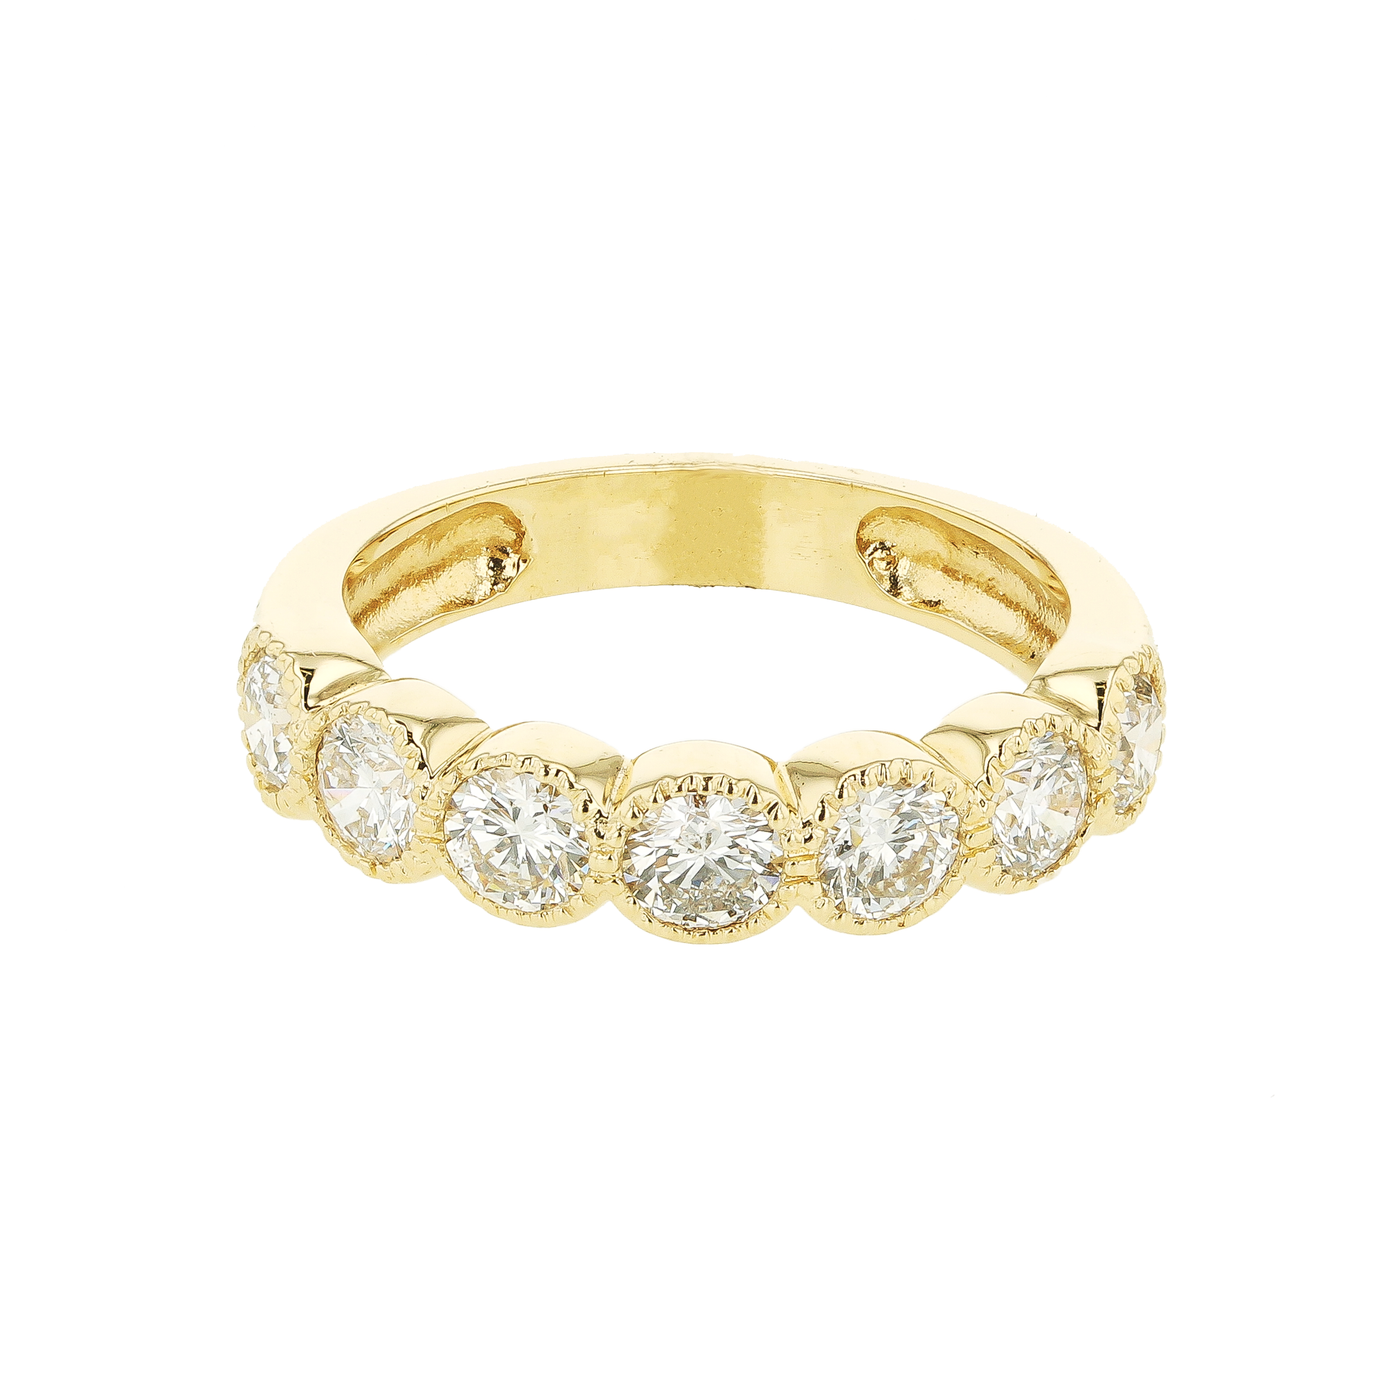 1.4 CTTW Diamond Wedding Ring in 14K Yellow Gold